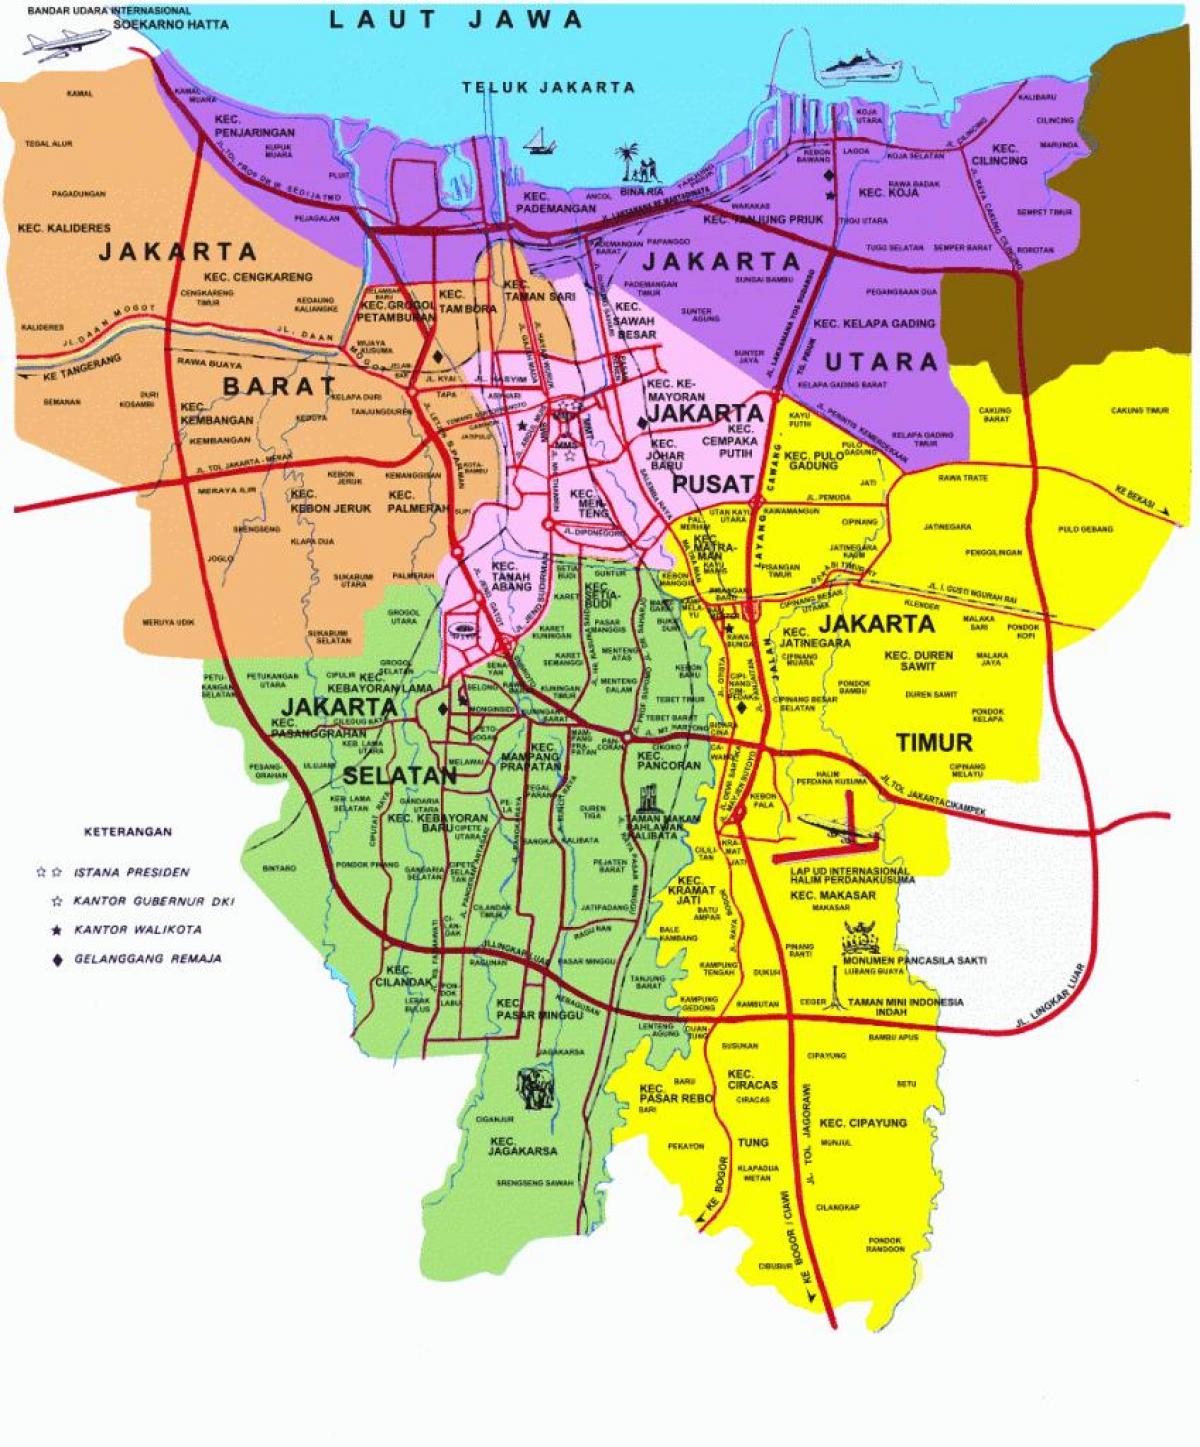 Jakarta turistattraksjonene kart